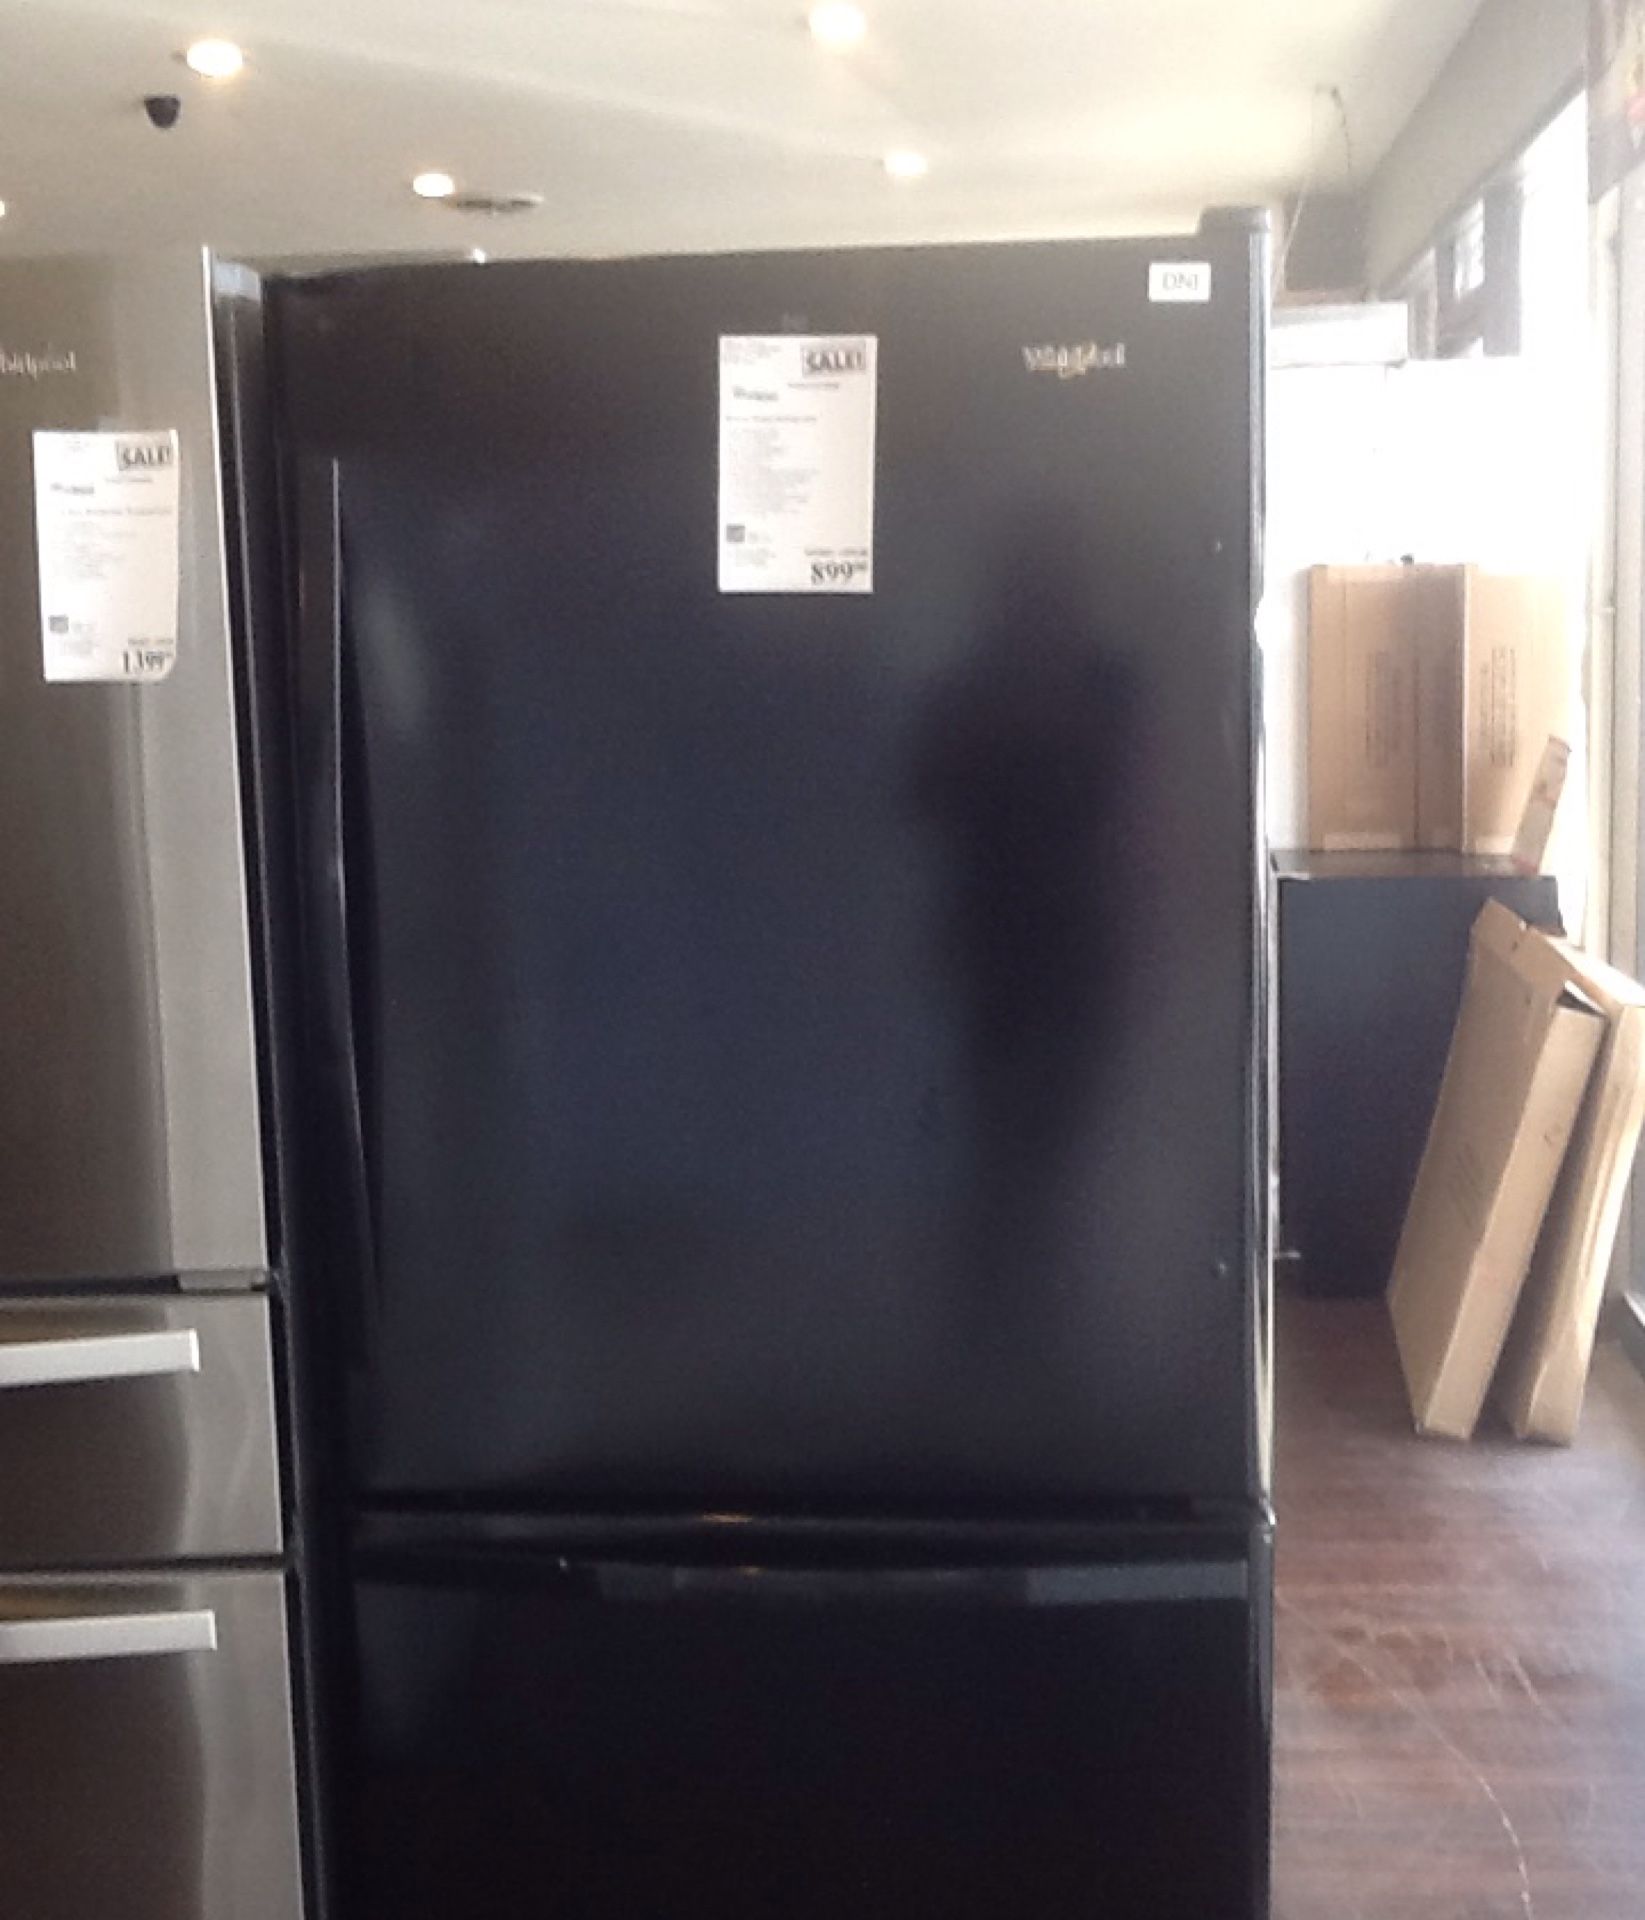 New open box refrigerator WRB322DMBB